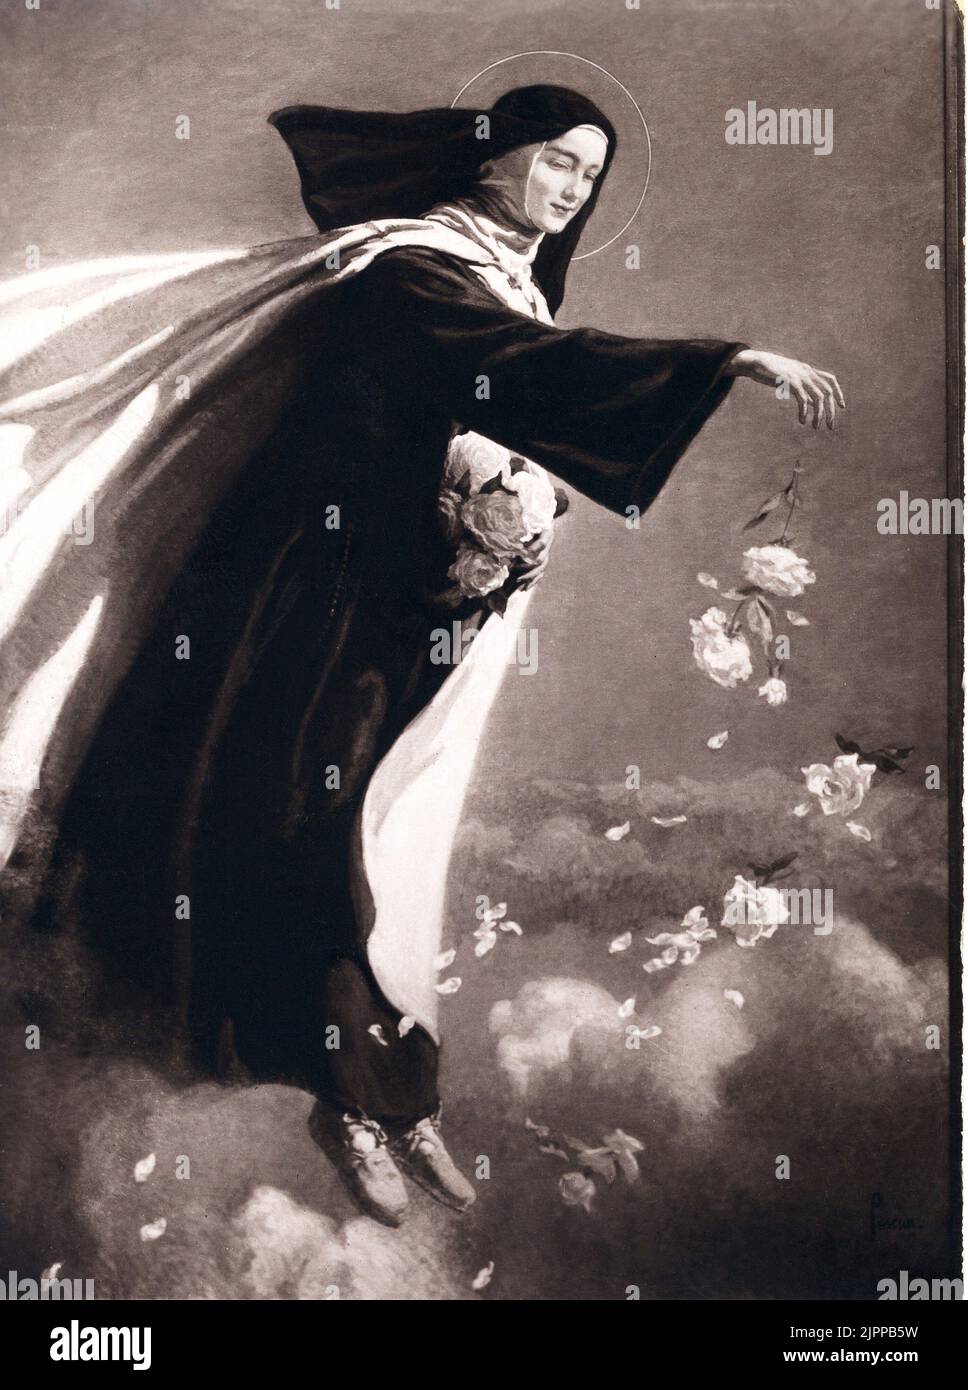 Saint Mother Thérèse of LISIEUX ( Marie françoise Thérèse Martin - 1873 - 1897 ) , sainte from 1925 , author of Histoire d'une ame ( post. 1898 ) - MADRE TERESA di LISIEUX del Banbino Gesù e del Volto santo , Santa canonizzata nel 1925 , autrice di Storia di un' anima ( post. 1898 ) - Portrait from french  painter PASCAU ( 1918 ca. )  - CATHOLIC RELIGION - RELIGIONE CATTOLICA - SANTO - SANTA Maria Teresa di - blessed - portrait - ritratto - rose - roses - flying nun - suora di clausura - nun of cloister - aureola  - volo - fly - nuvole ----  Archivio GBB Stock Photo